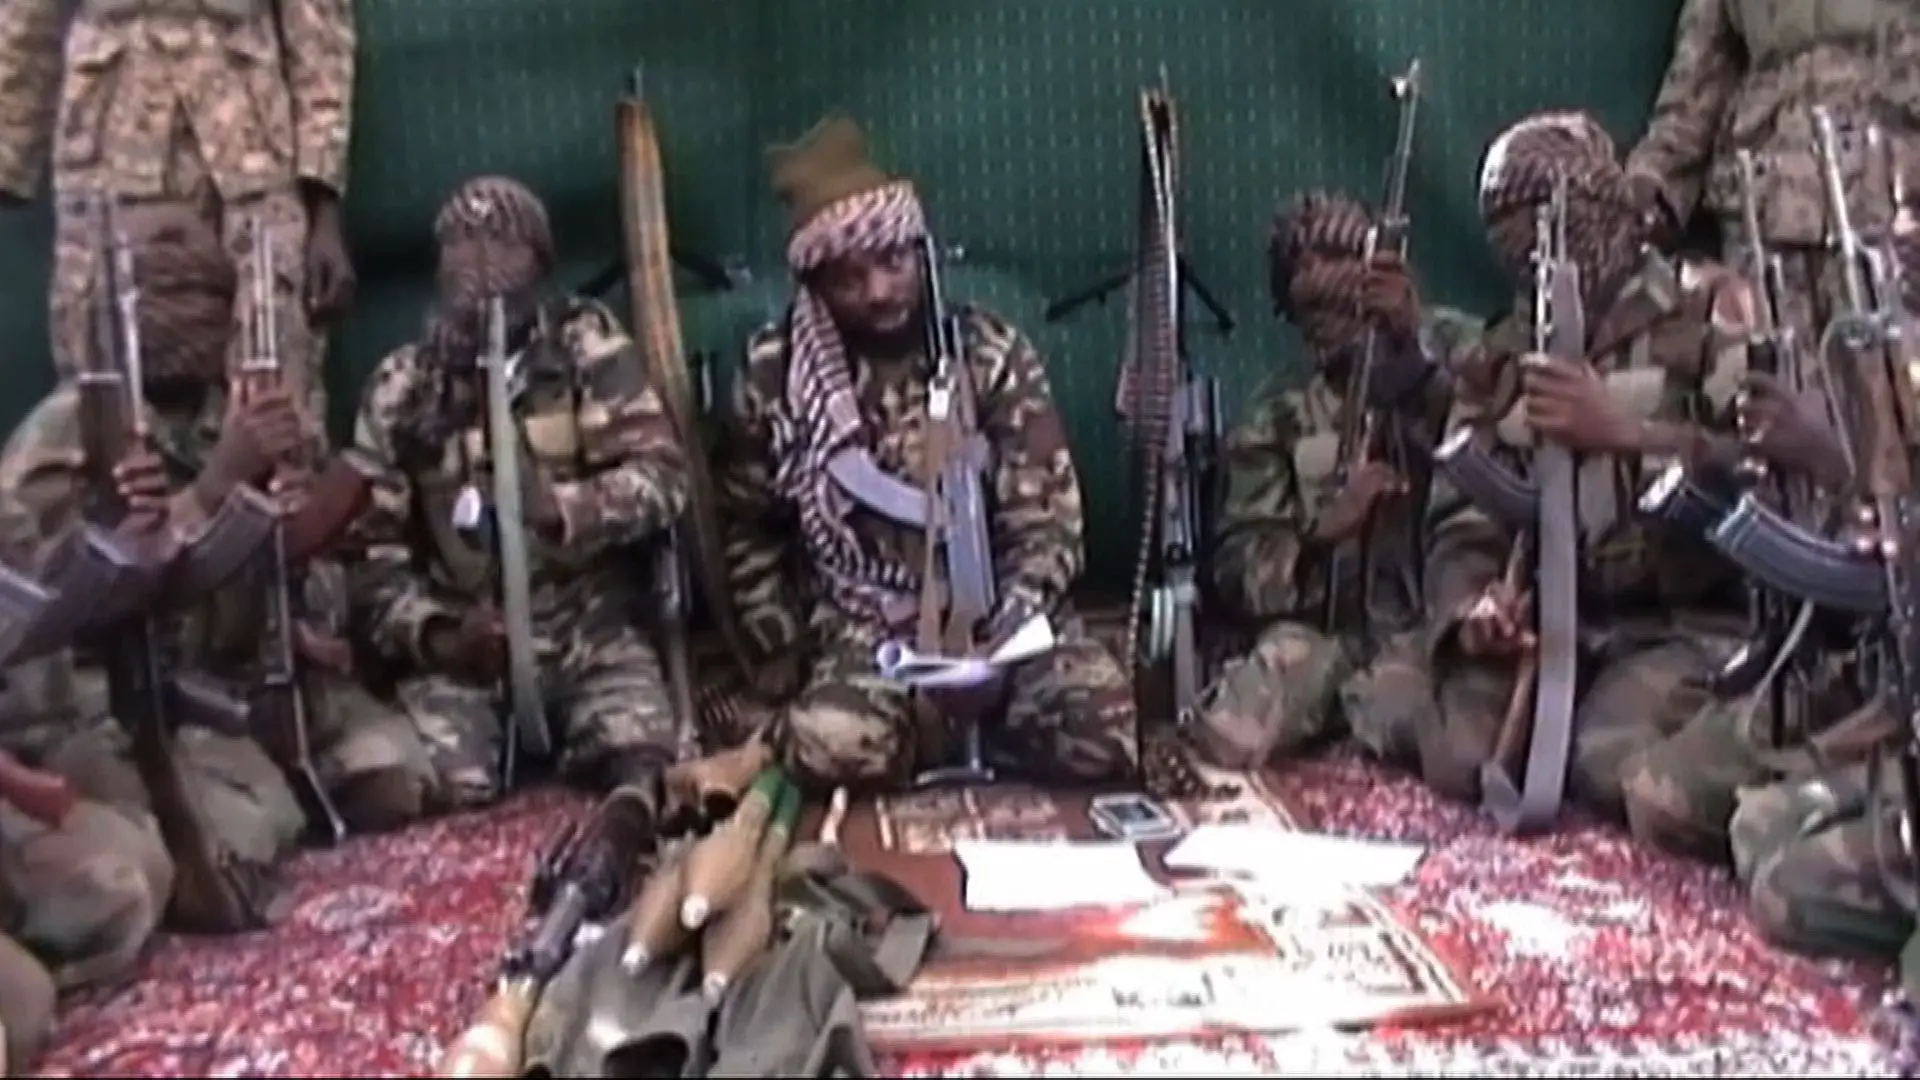 Boko Haram menace le Tchad